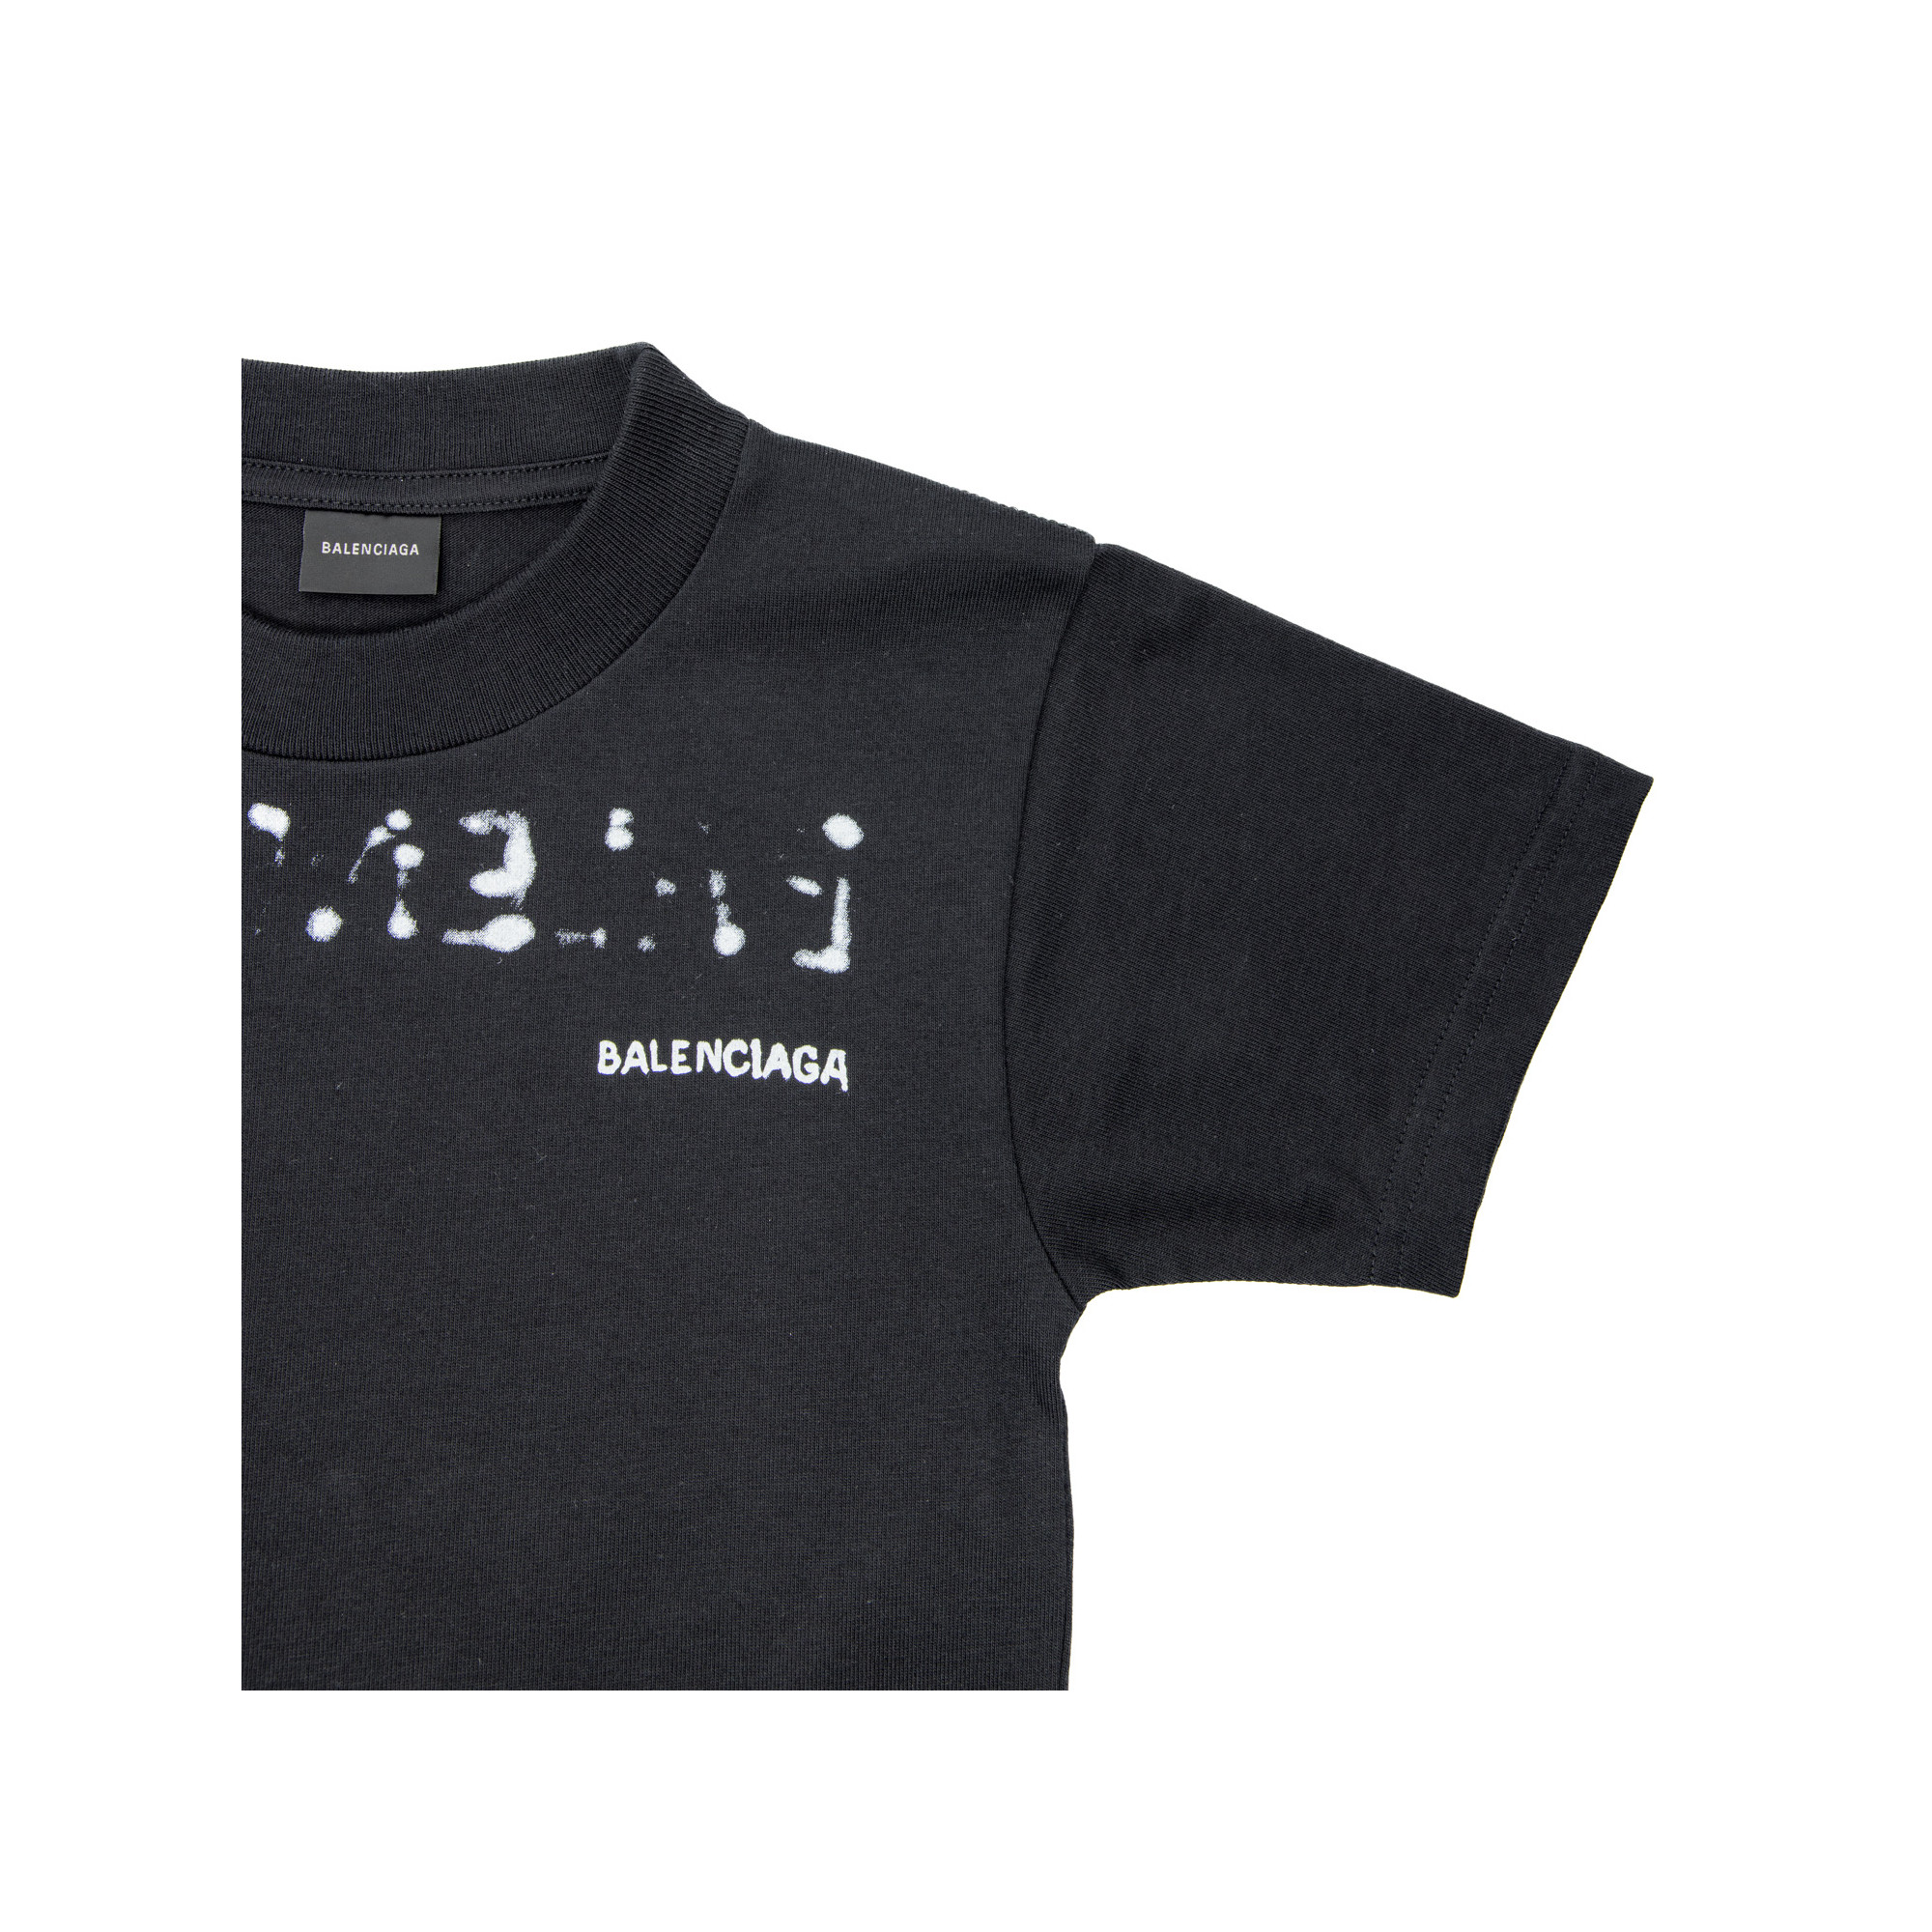 Louis Vuitton Damier T-shirt Dark Gray – Tenisshop.la